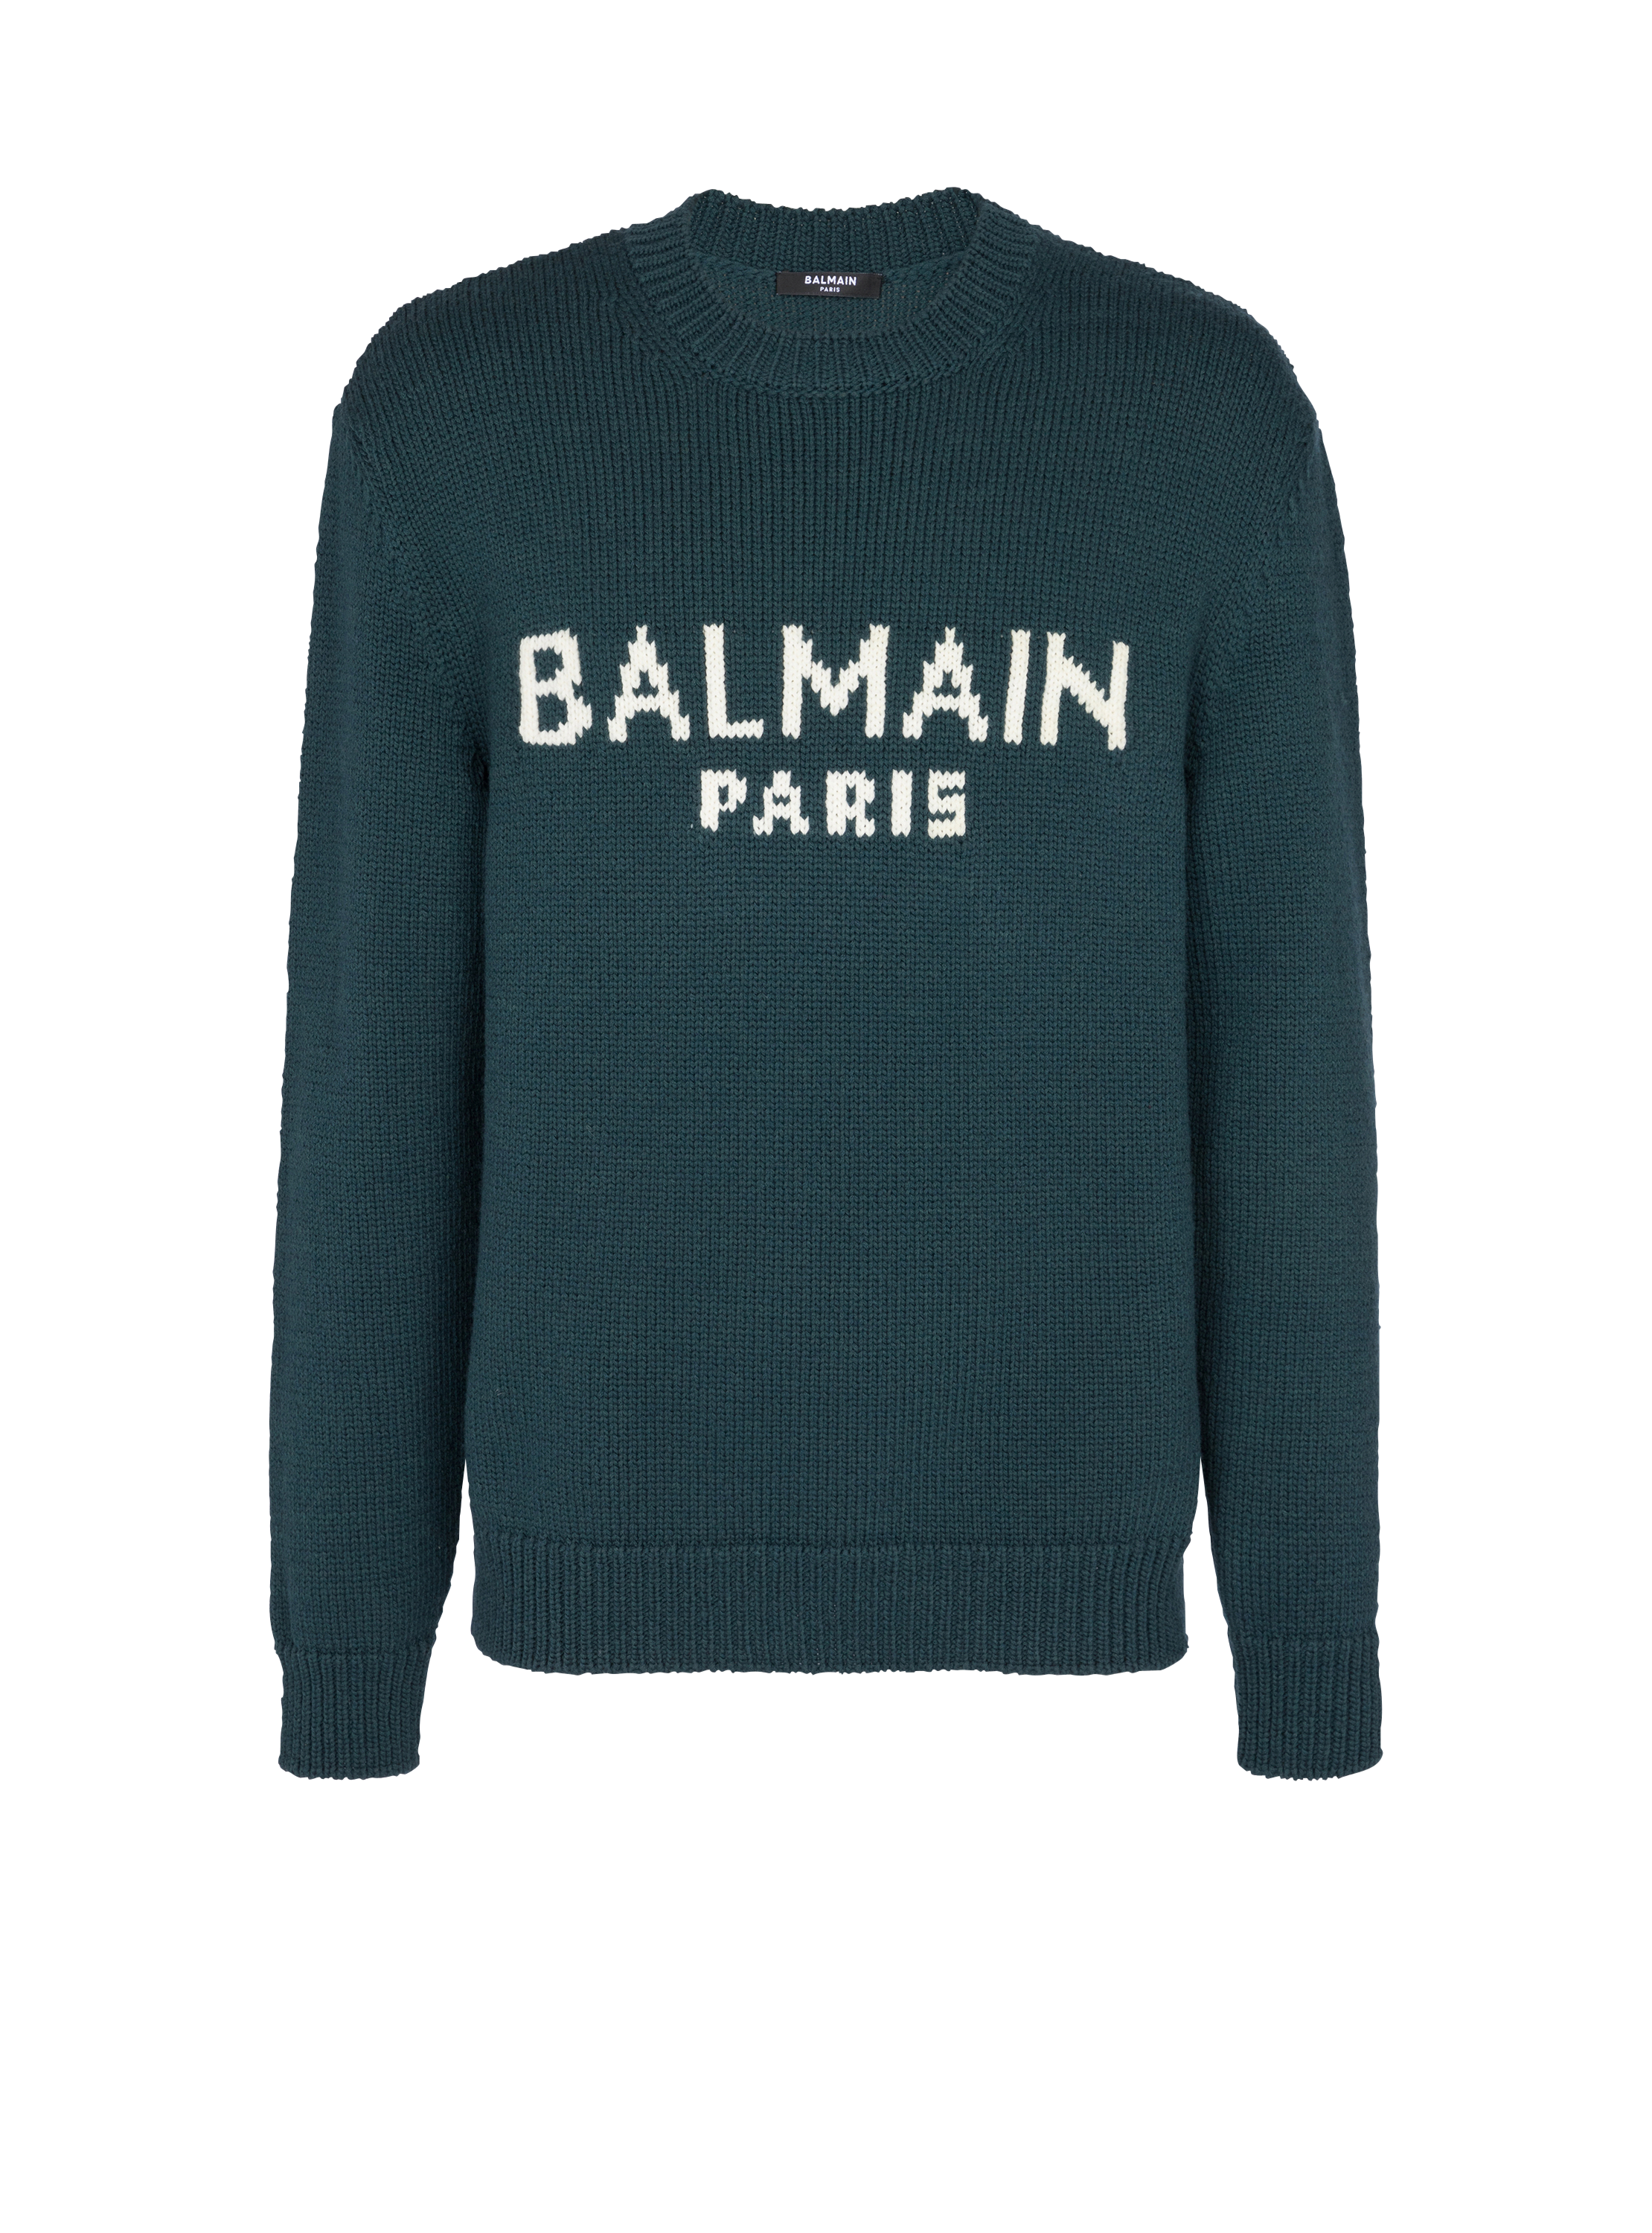 Balmain Pullover aus Merinowolle, grün, hi-res